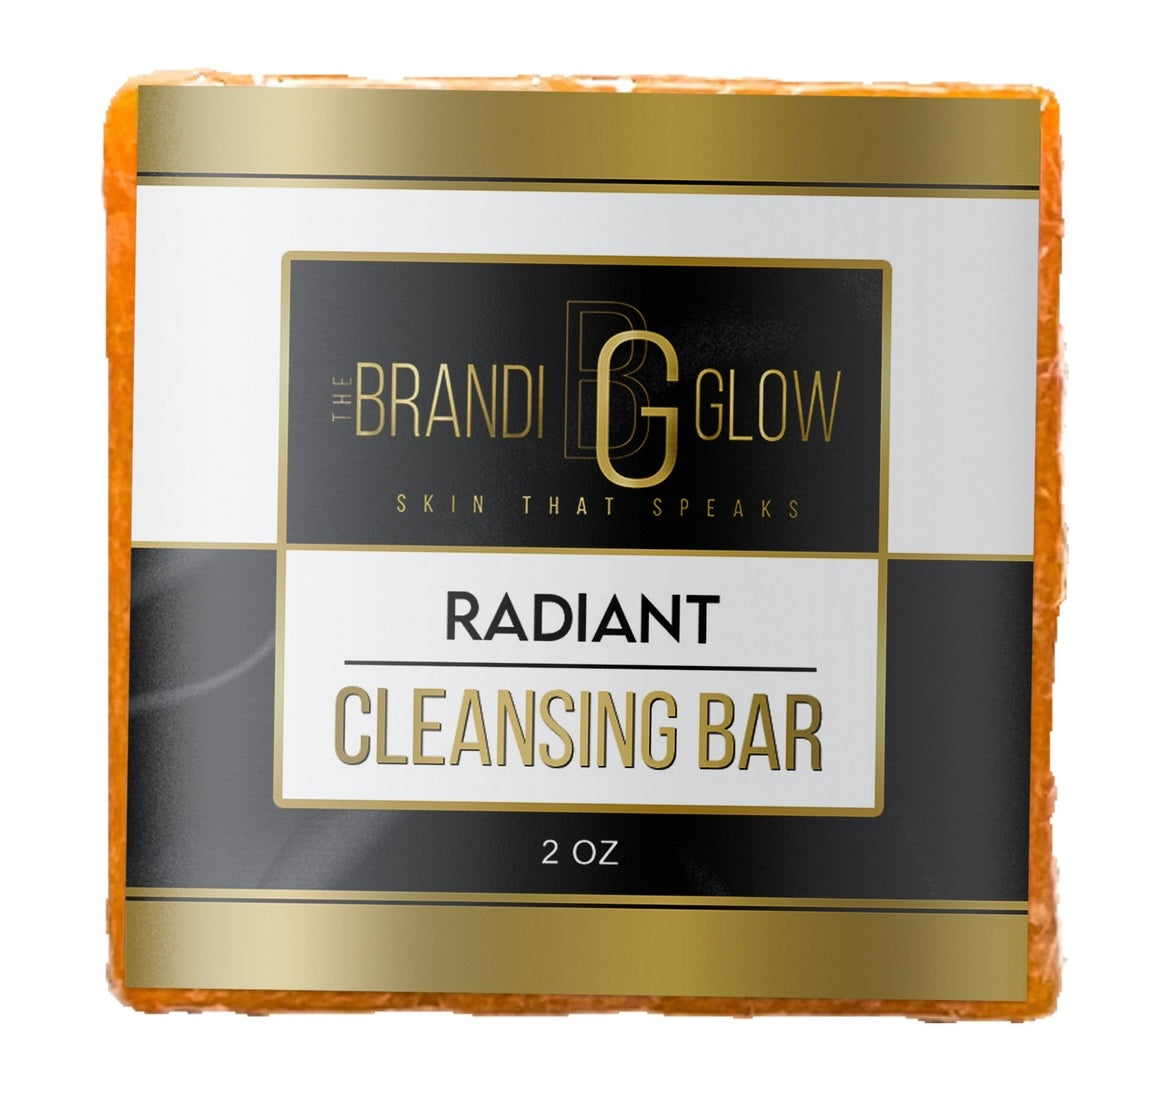 Radiant Cleansing Bar